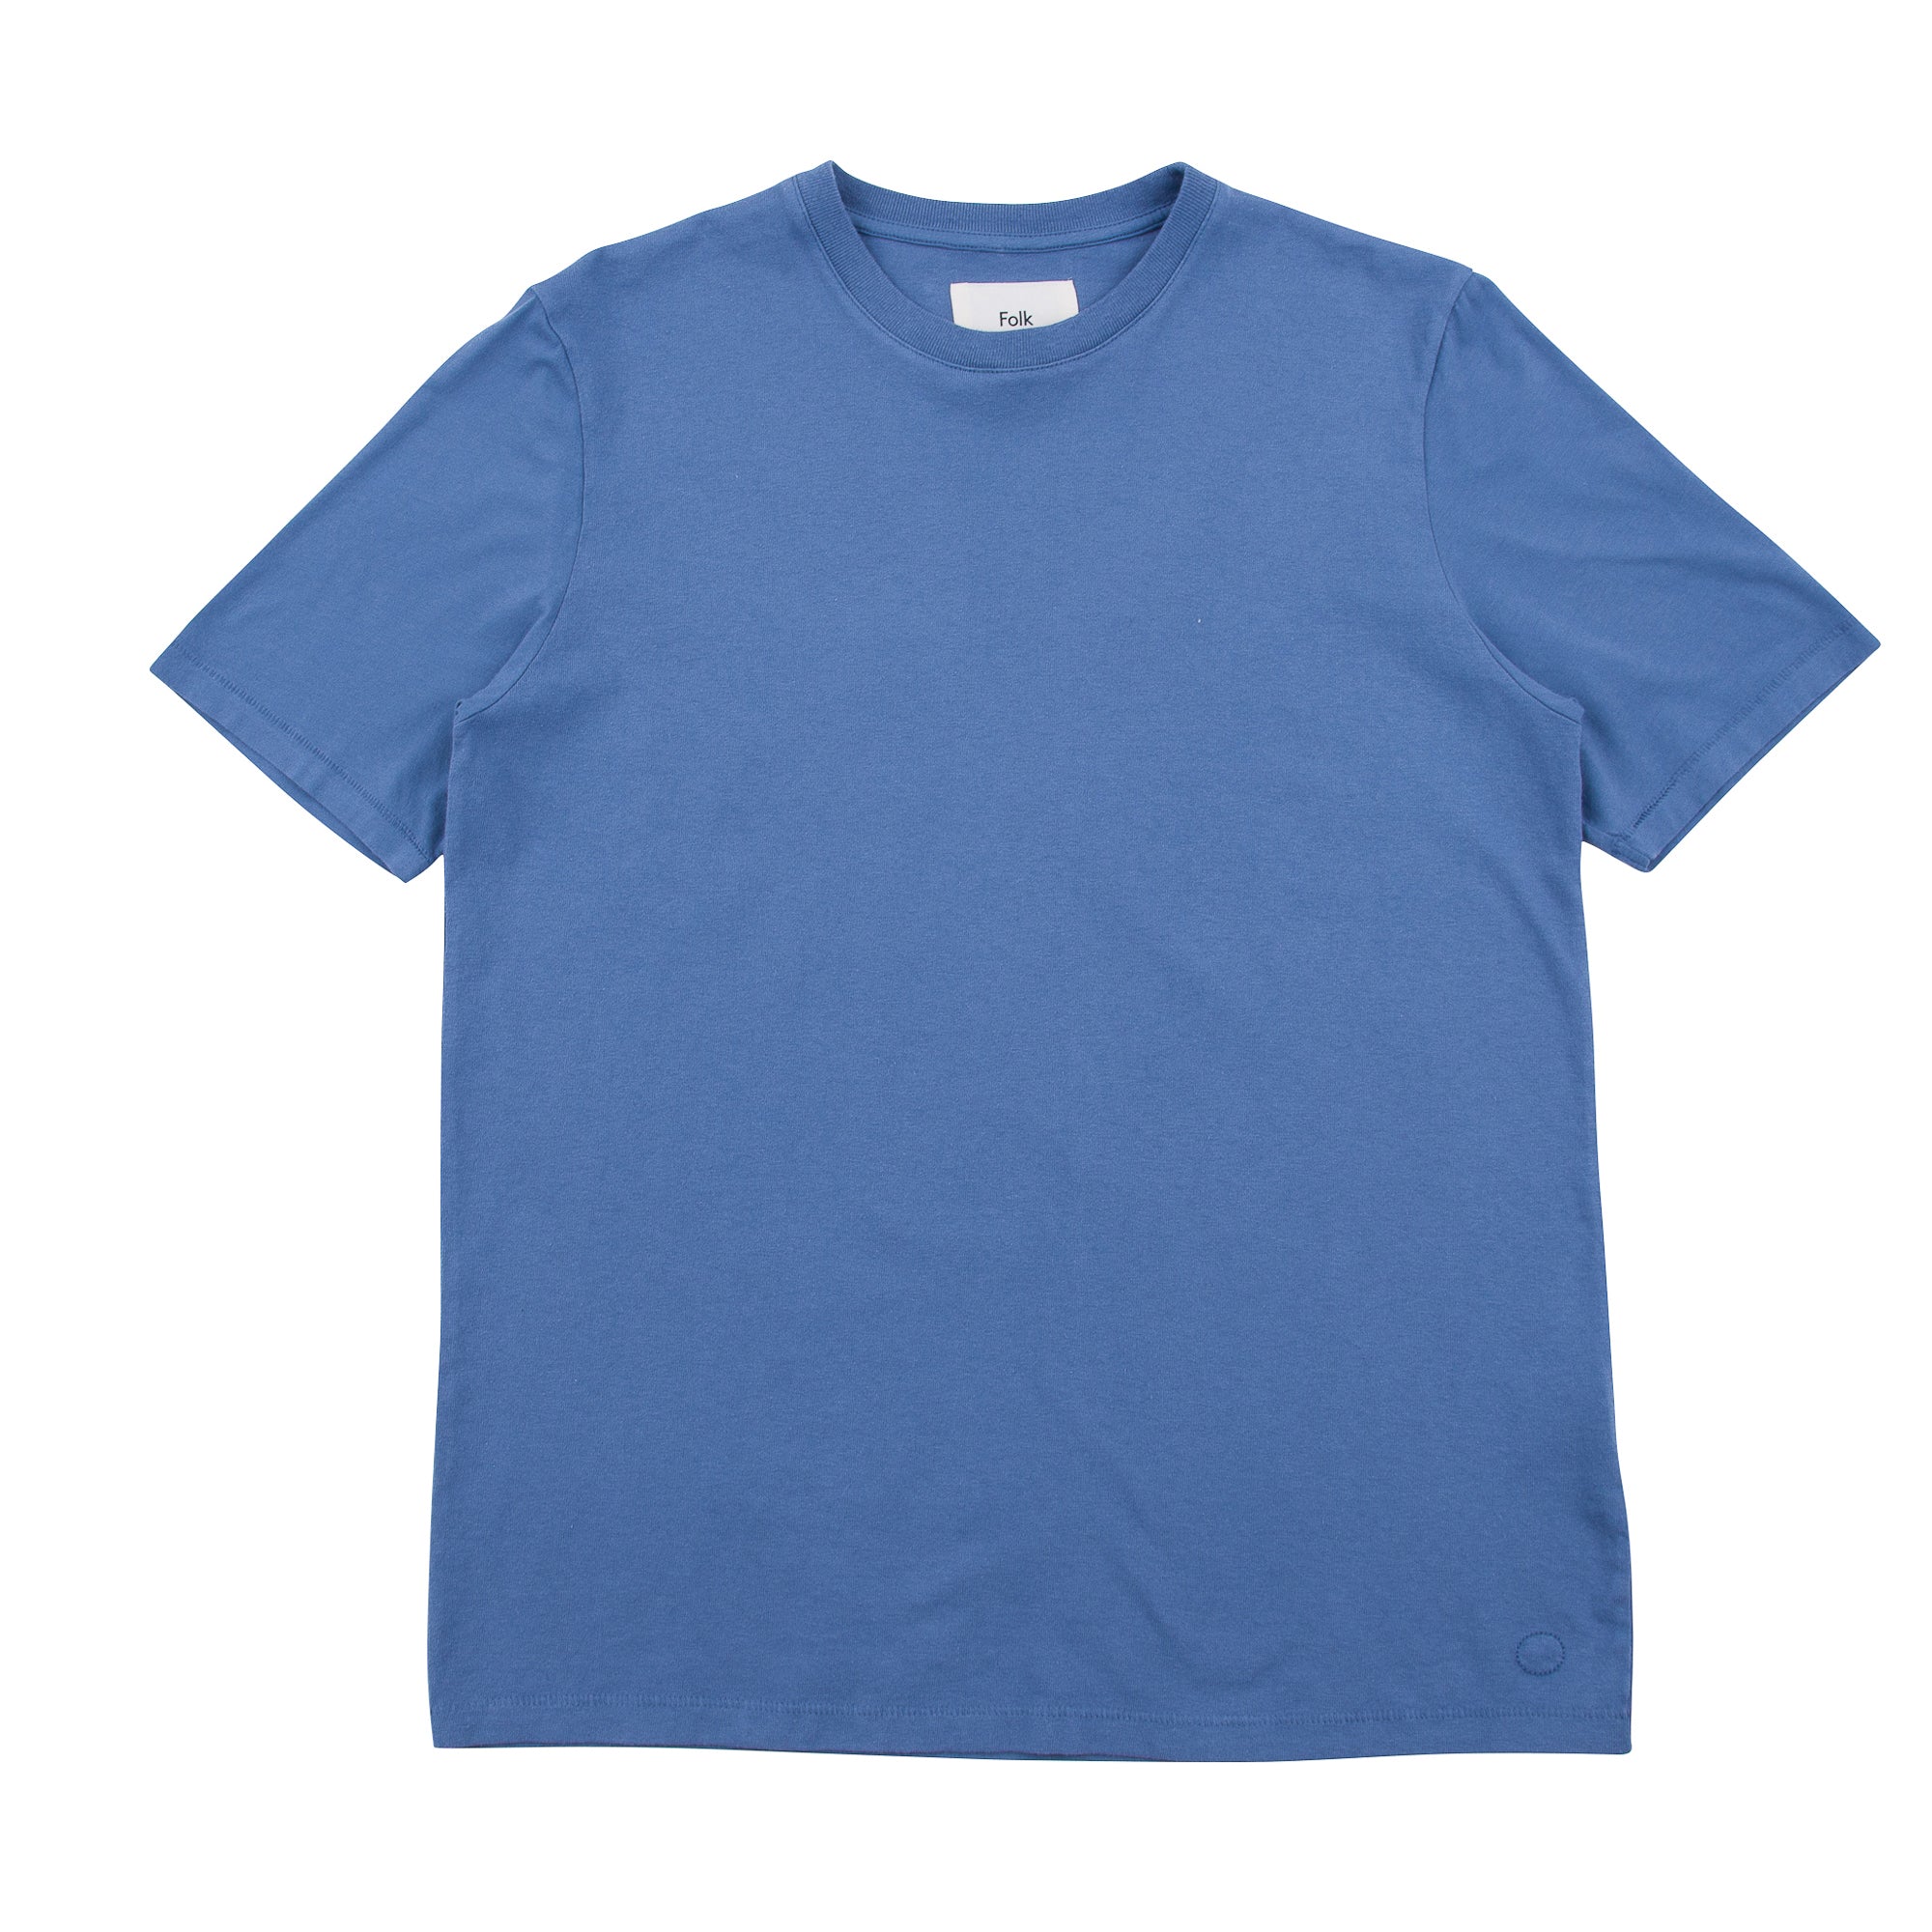 Contrast Sleeve Tee - Soft Blue-Folk-W2 Store